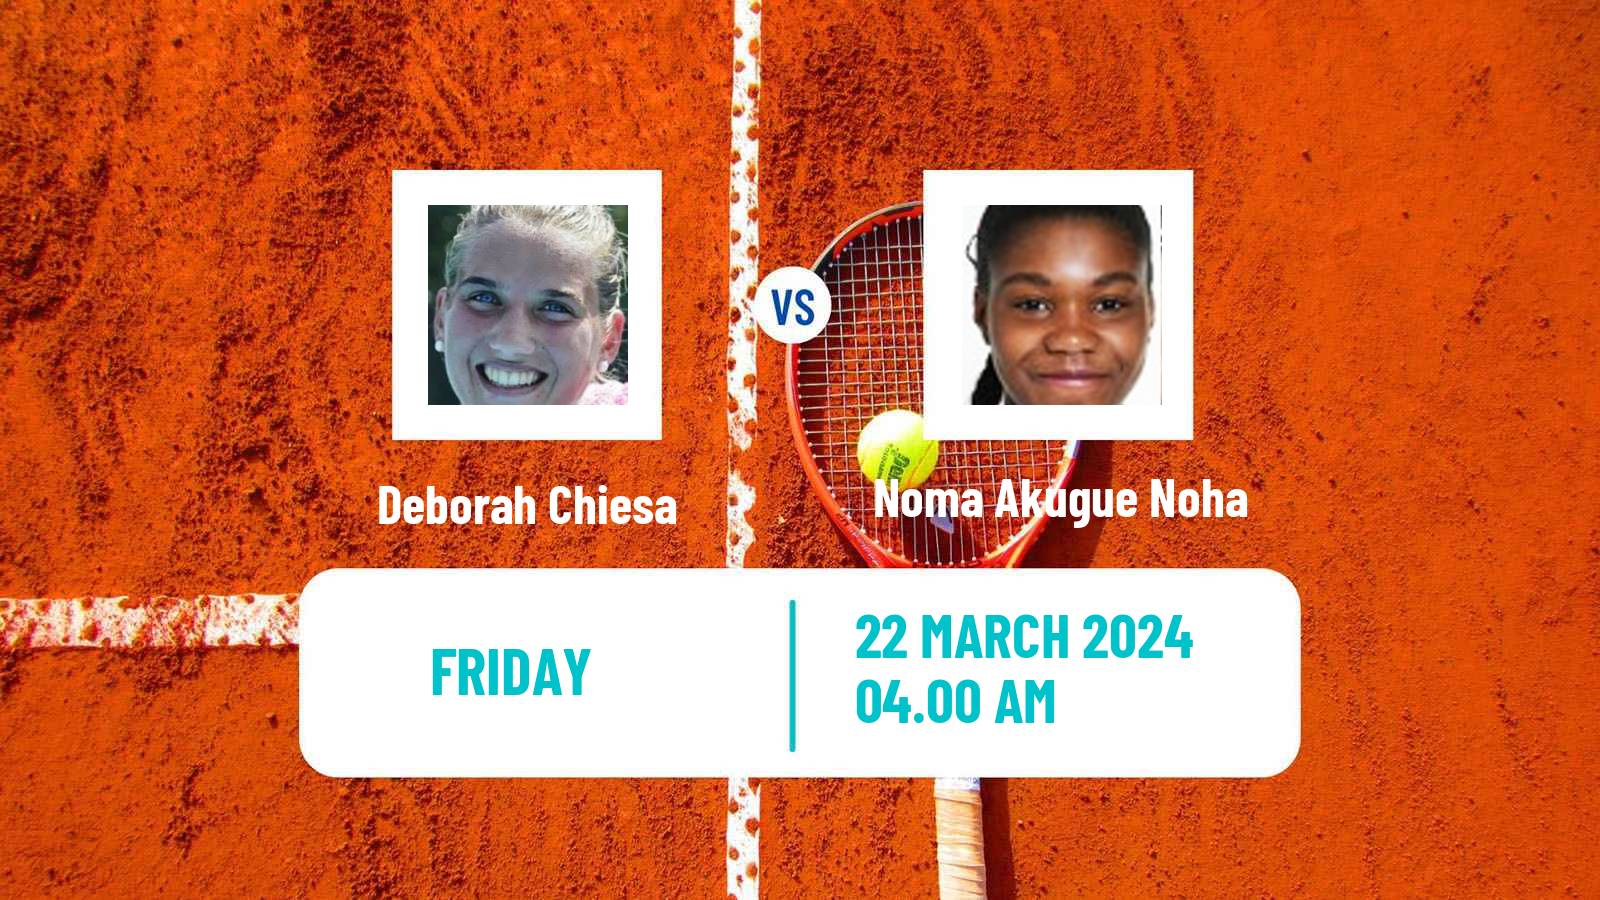 Tennis ITF W35 Alaminos Larnaca 2 Women Deborah Chiesa - Noma Akugue Noha